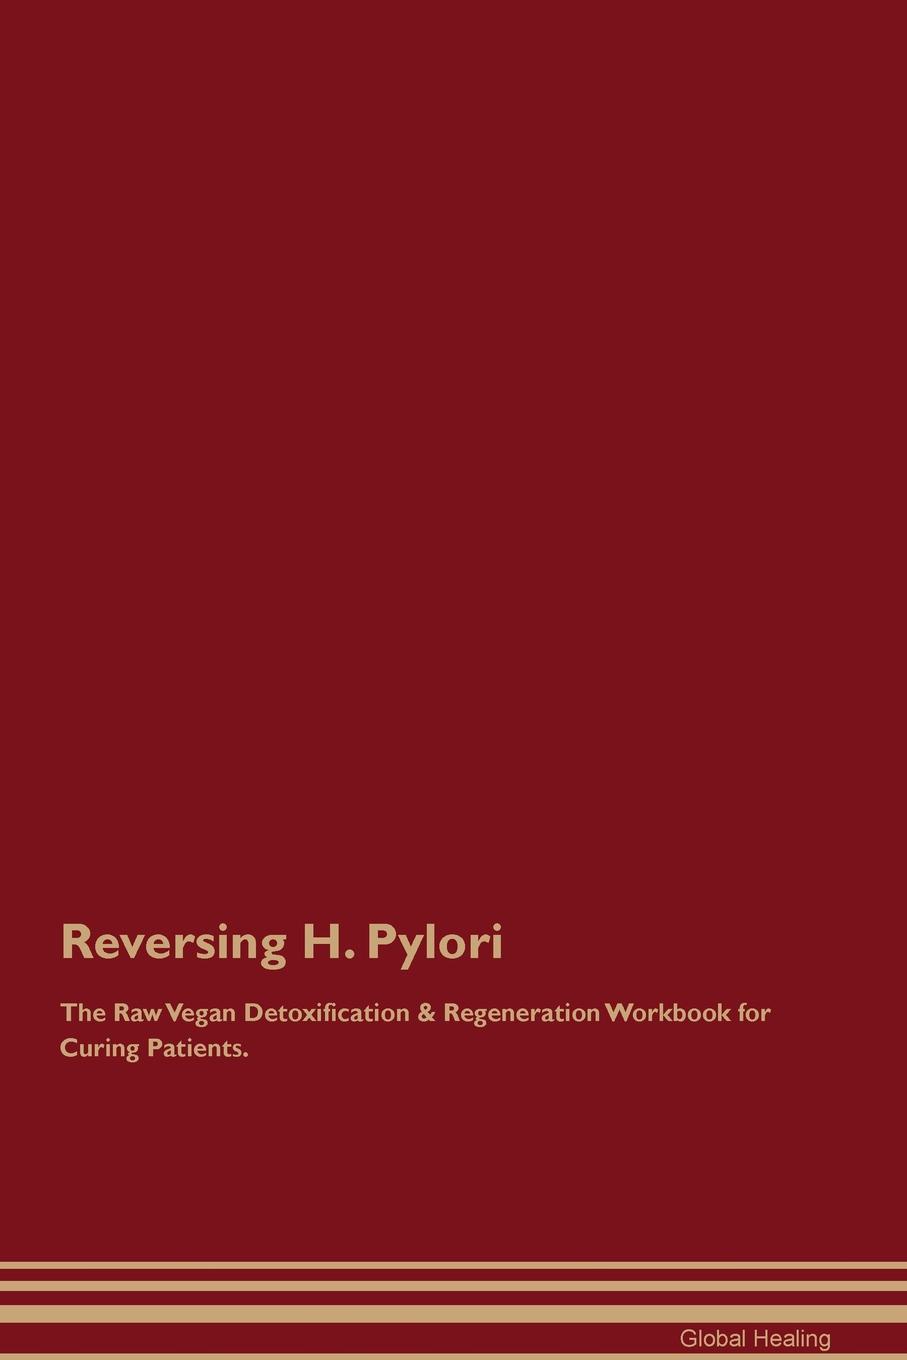 Reversing H. Pylori The Raw Vegan Detoxification & Regeneration Workbook for Curing Patients